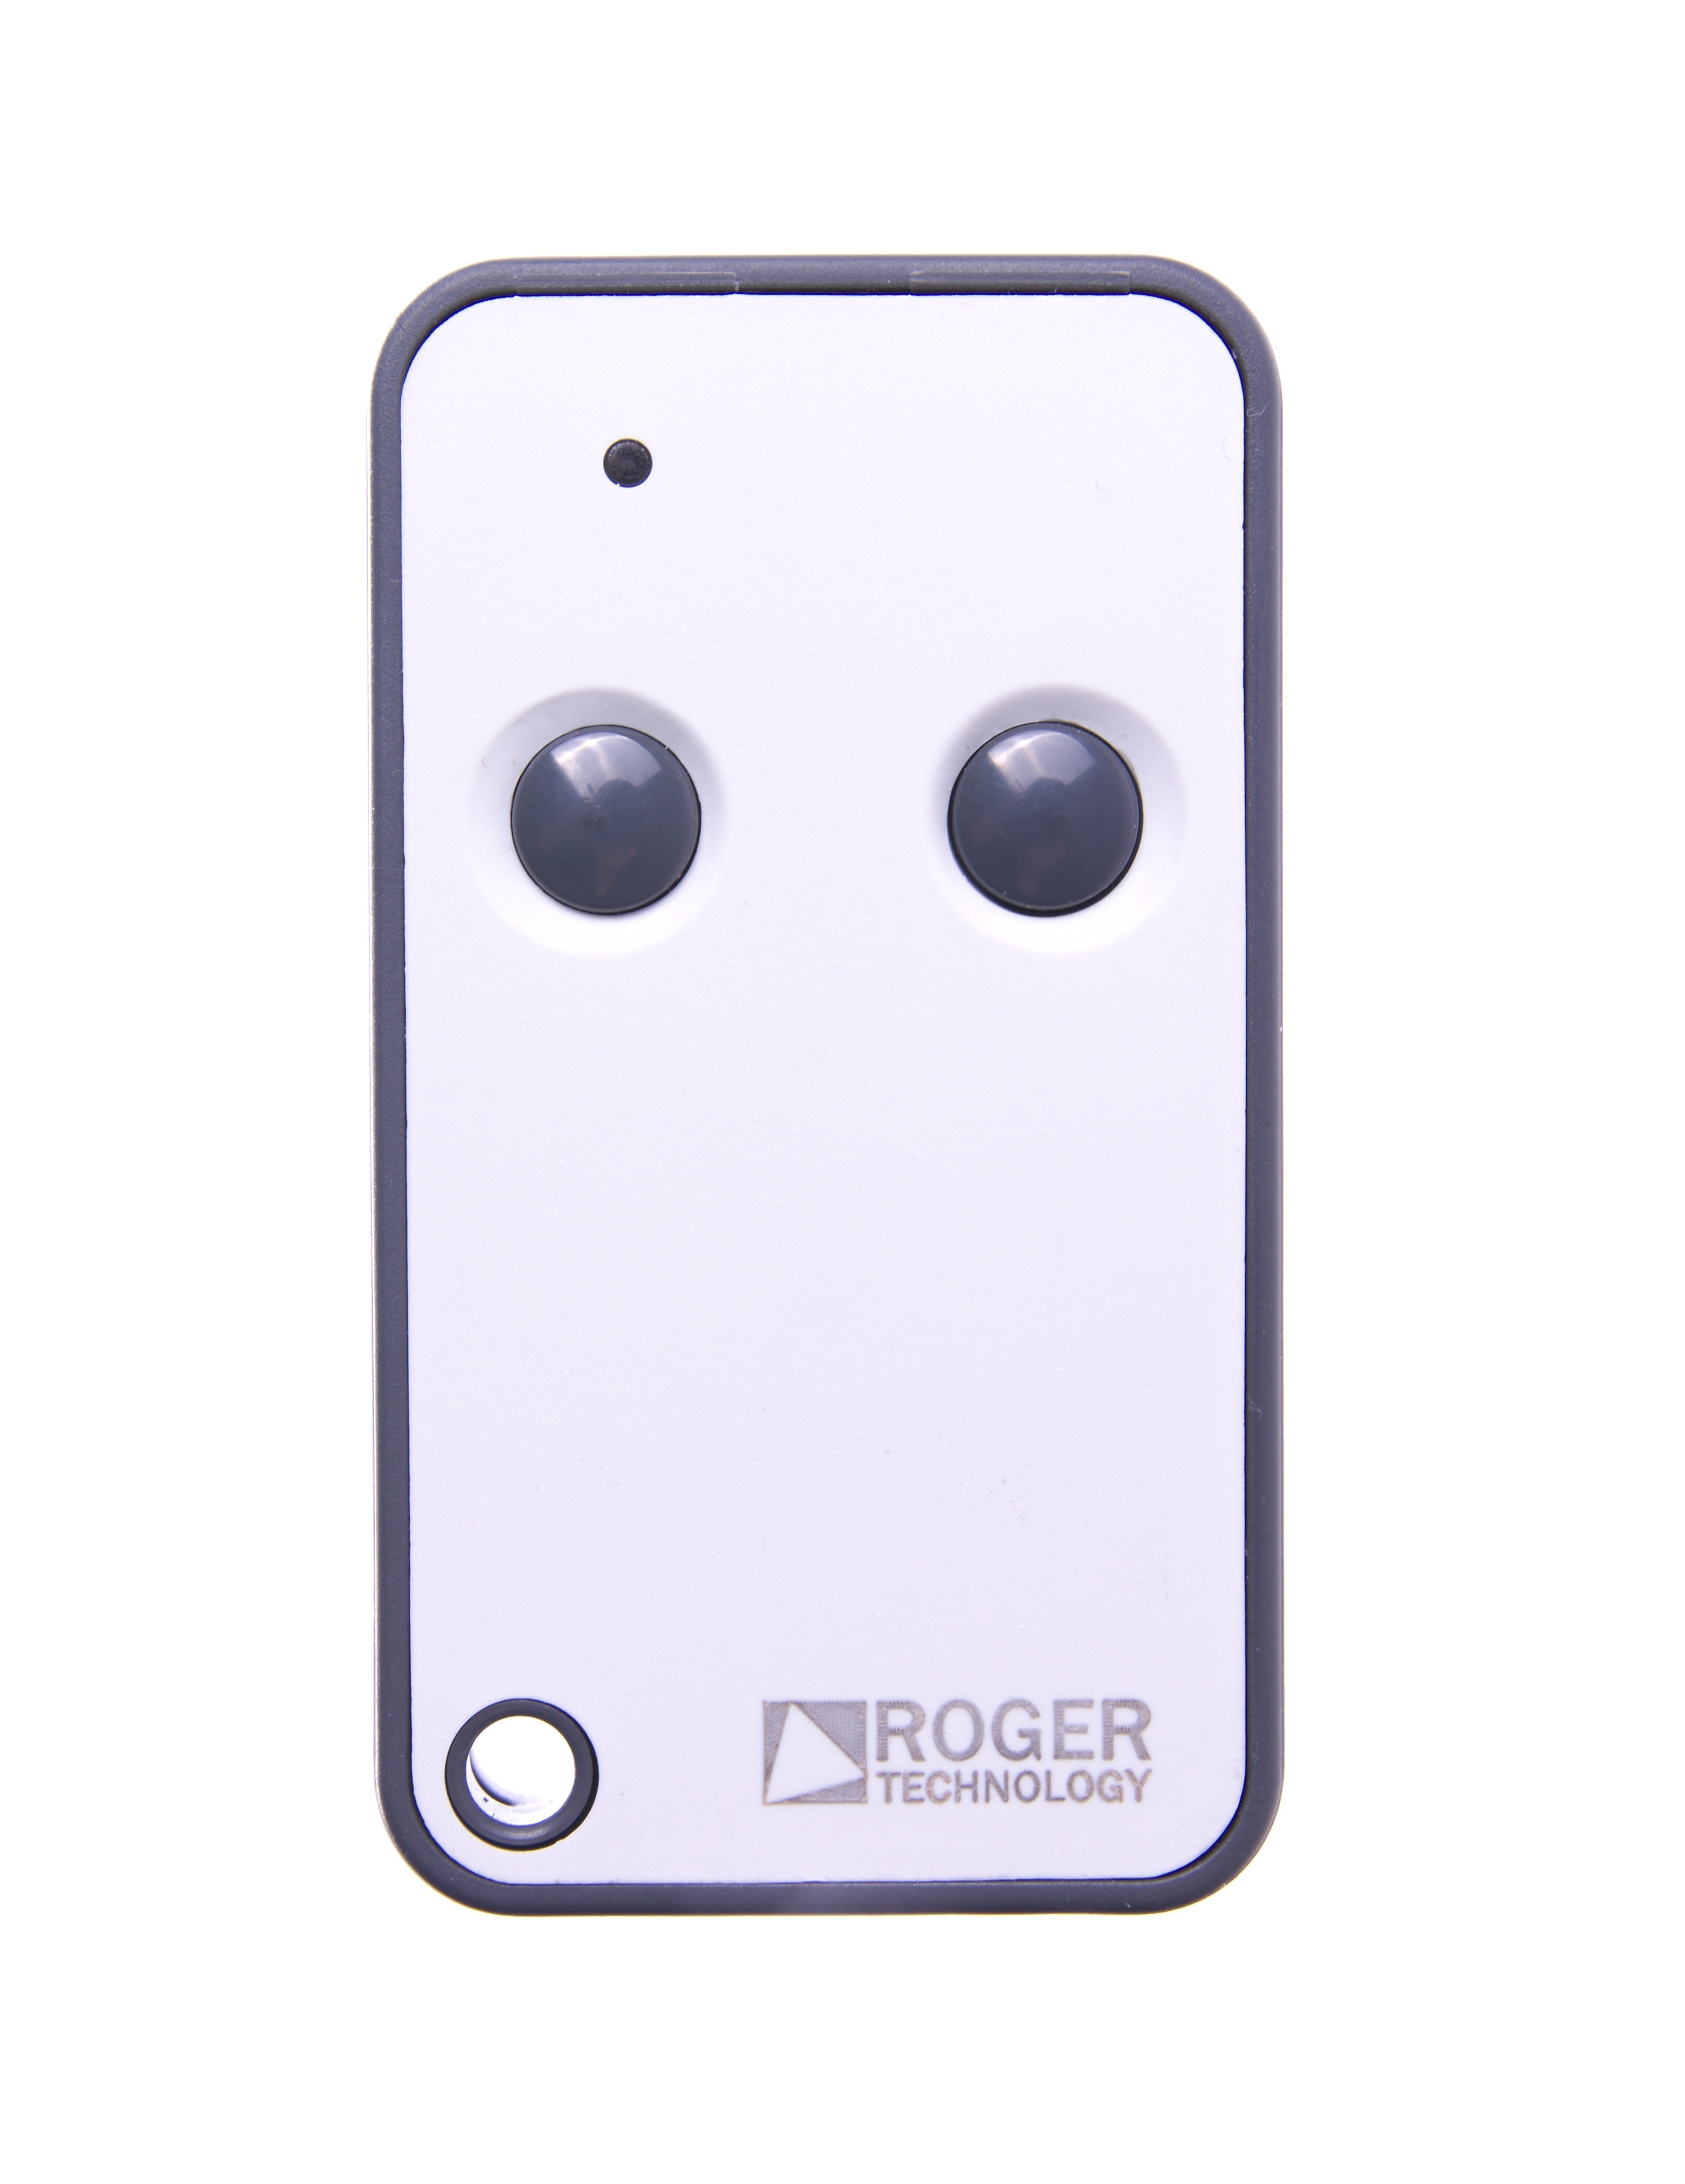 Roger Technology Dálkový ovladač Roger E80/TX52R/2, 2 kanálový ovladač, 433,92 MHz